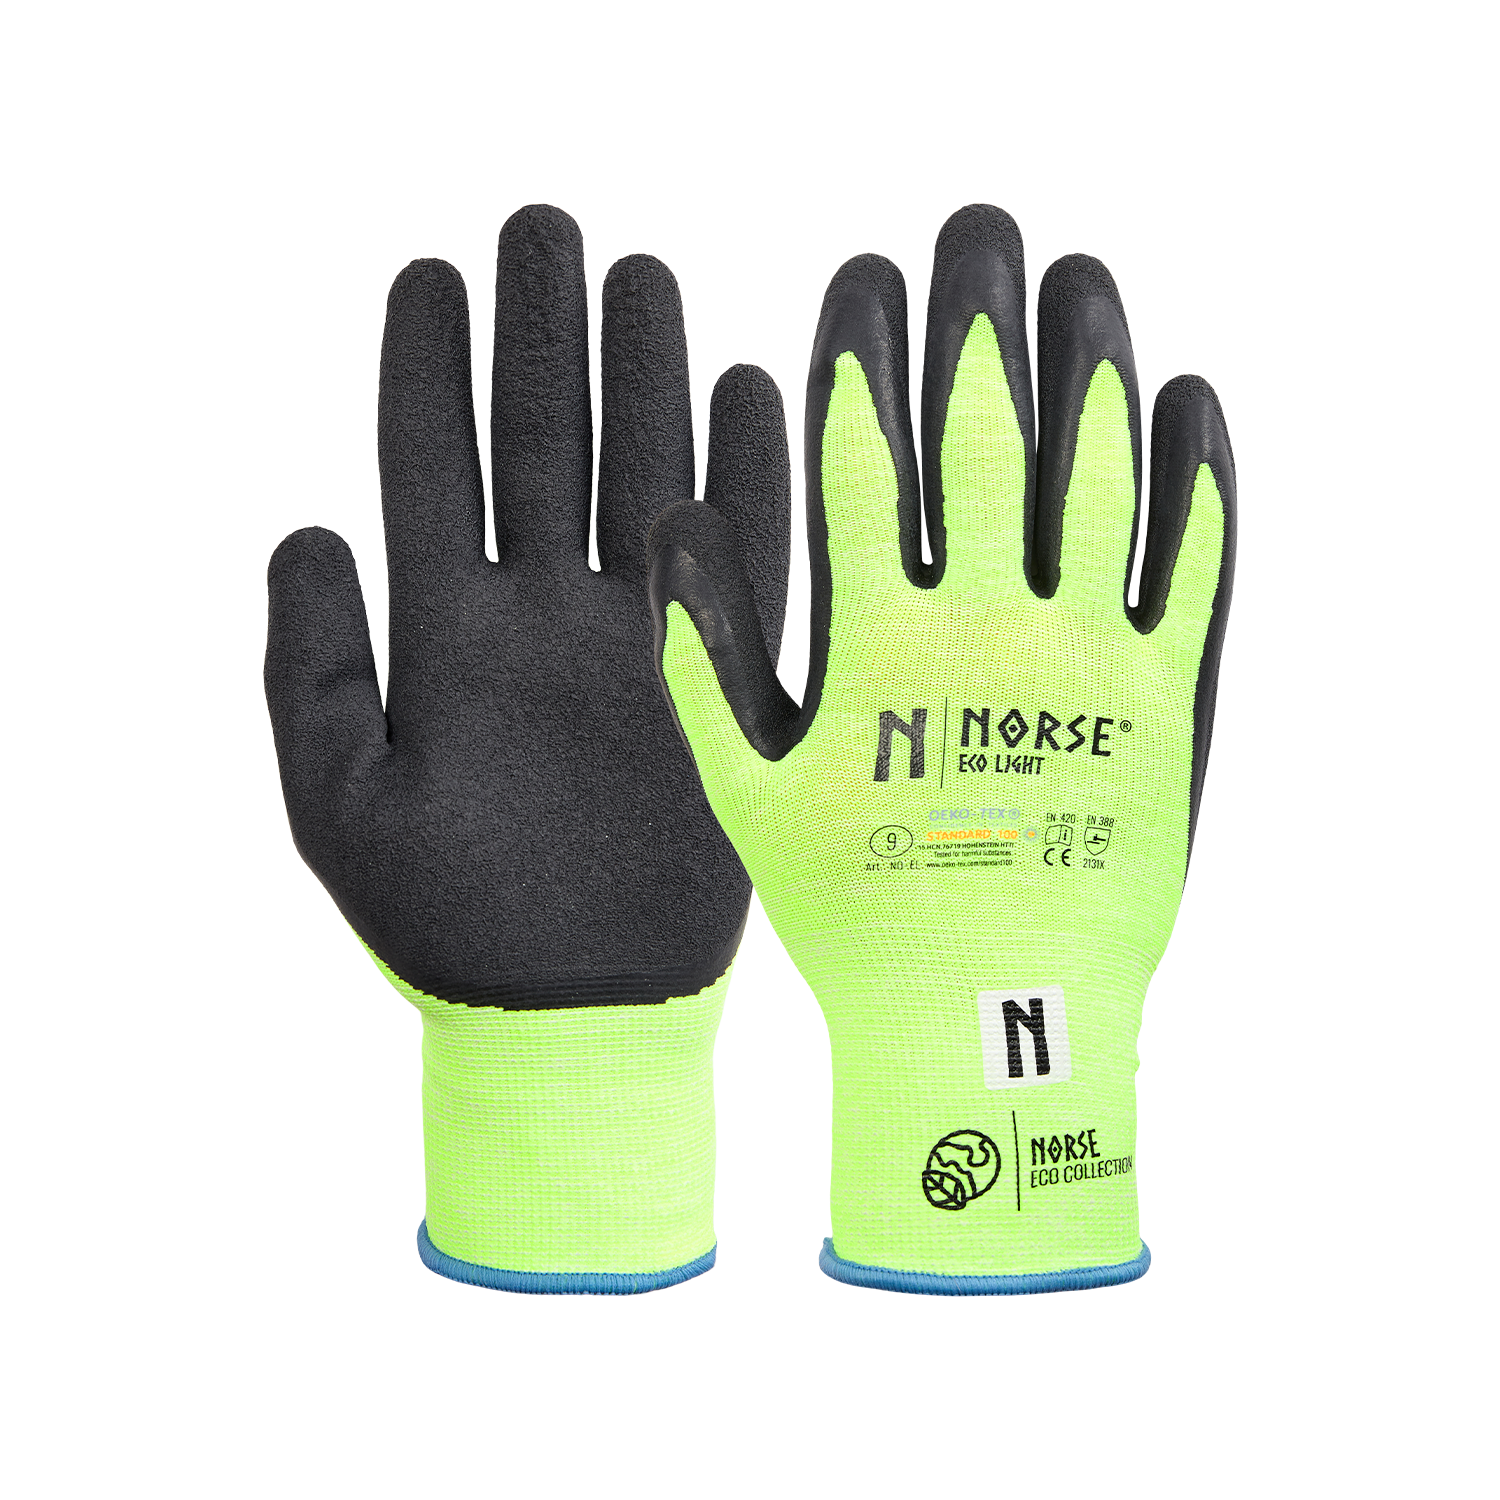 NORSE Eco Light assembly gloves size 9